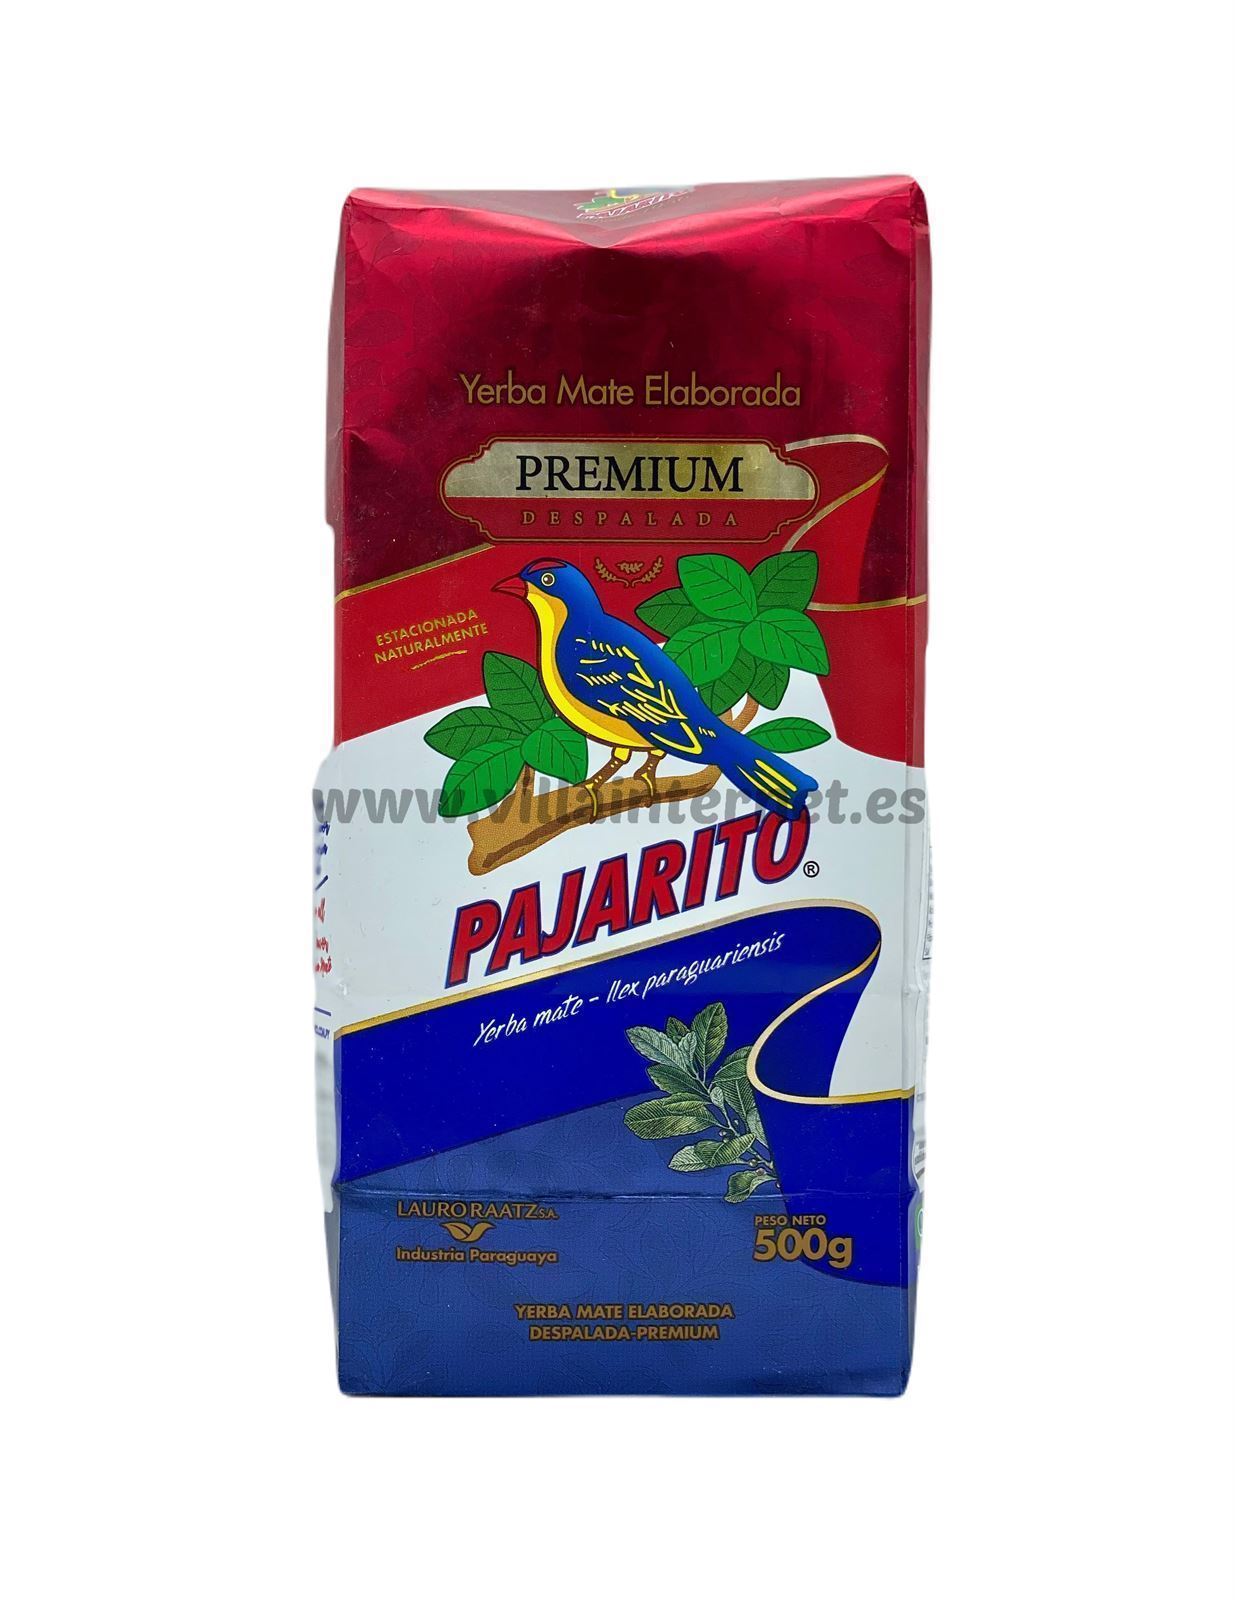 Yerba mate elaborada Pajarito premium despalada 500g - Imagen 1